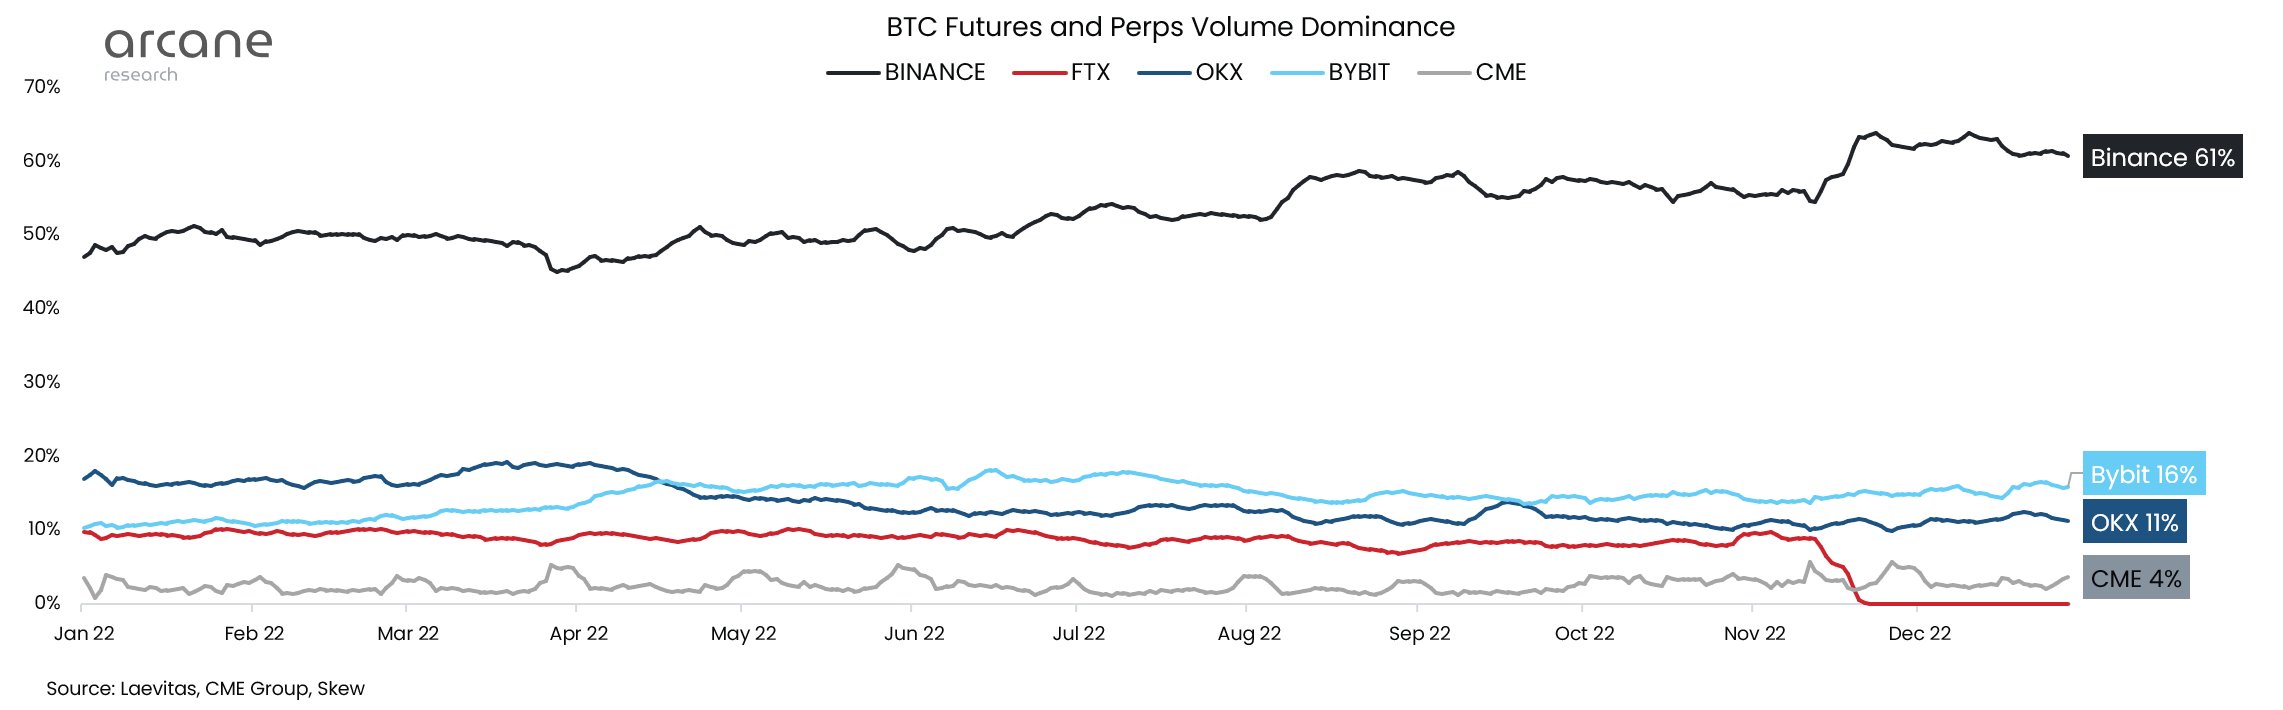 Bitcoin futures and perps volume / Binance dominance